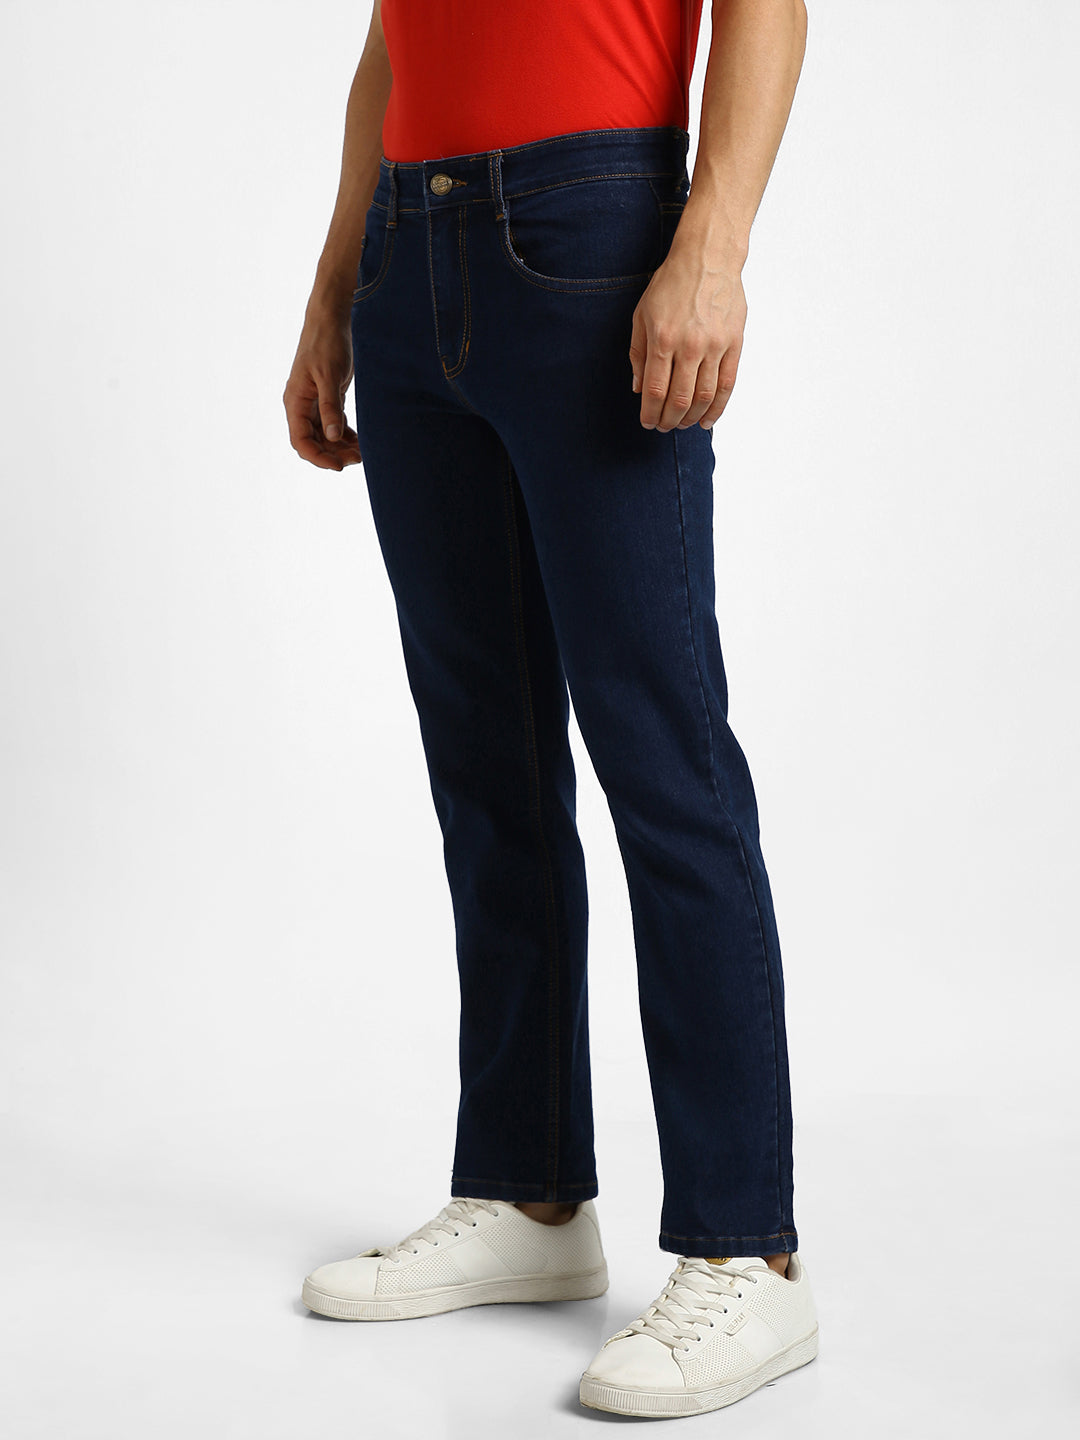 Urbano Men's Dark Blue Regular Fit Washed Jeans Stretchable